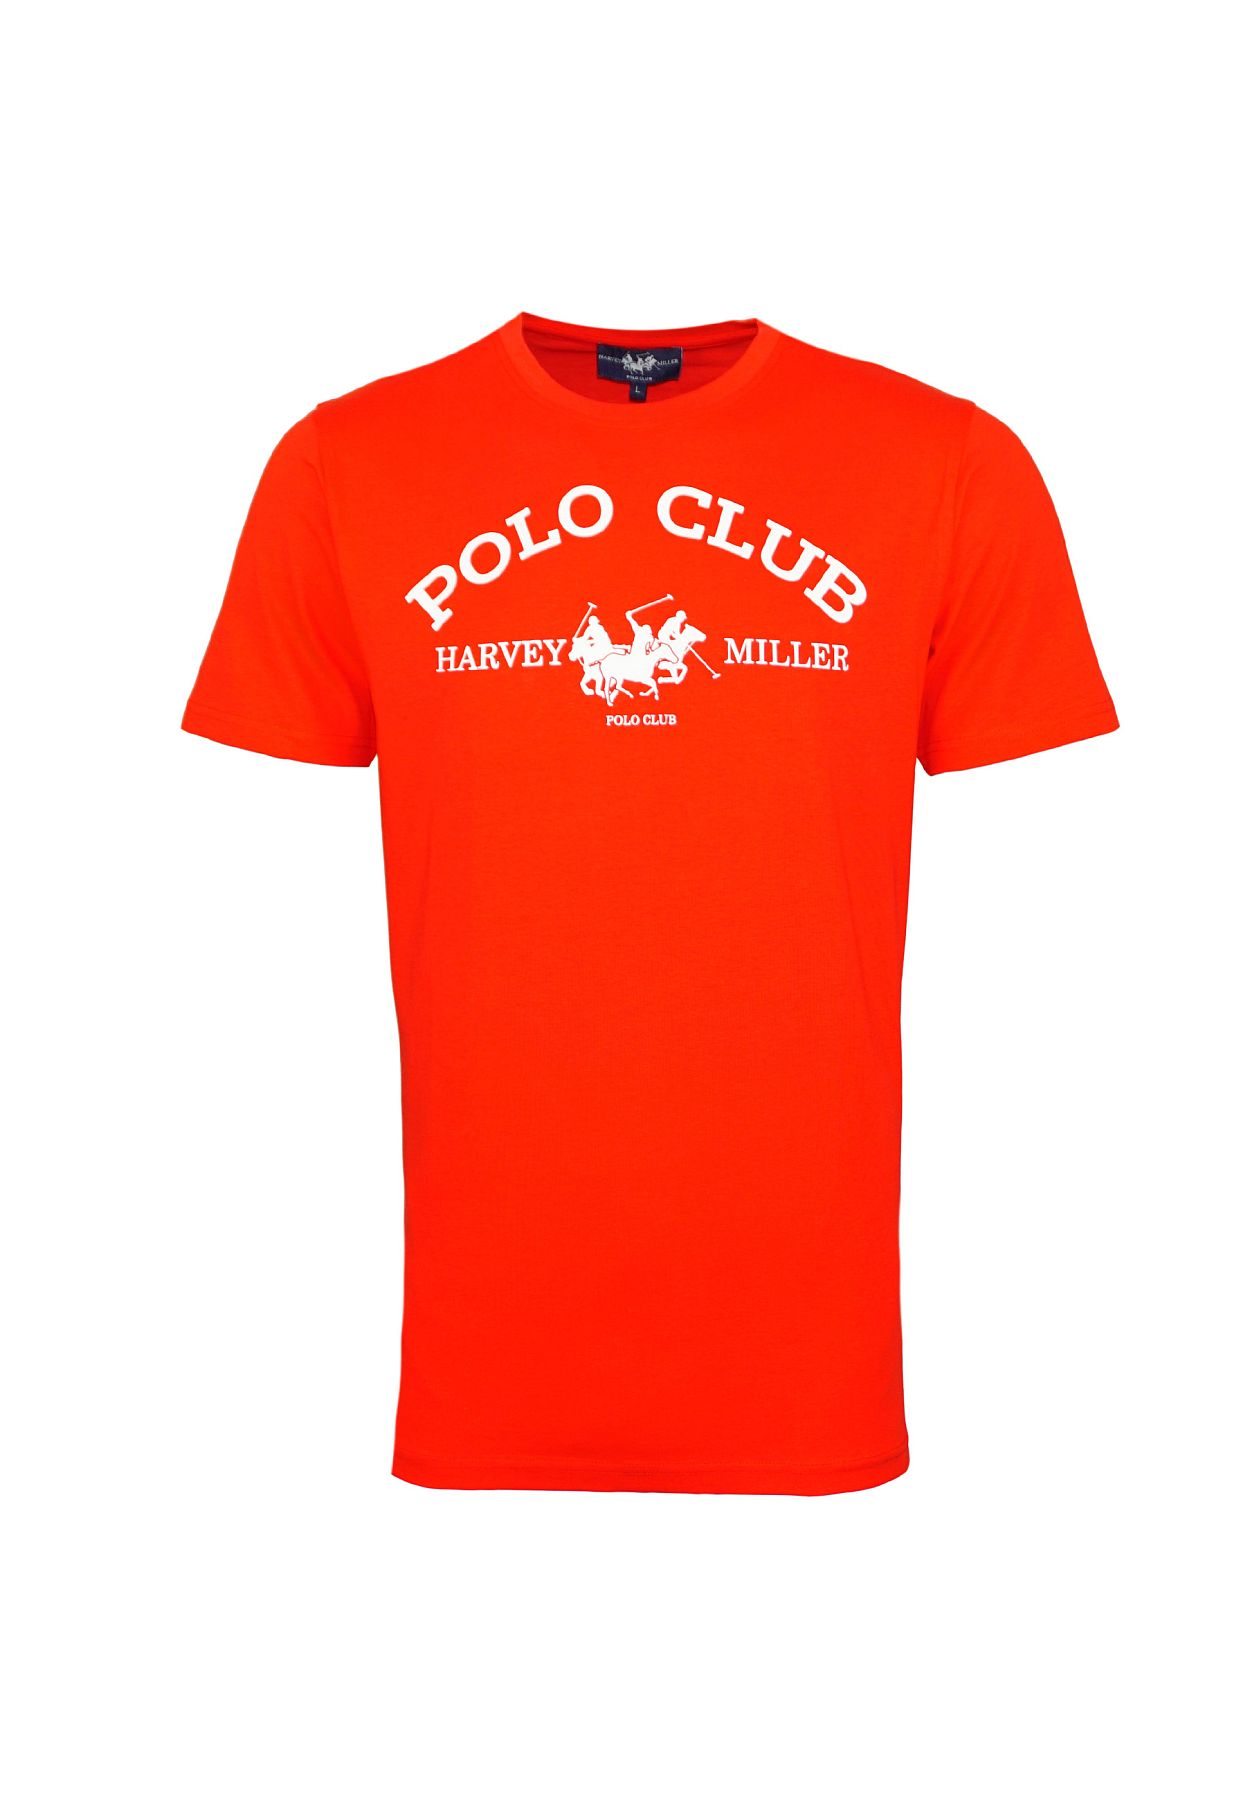 Футболка HARVEY MILLER POLO CLUB 'Polo Club', красный